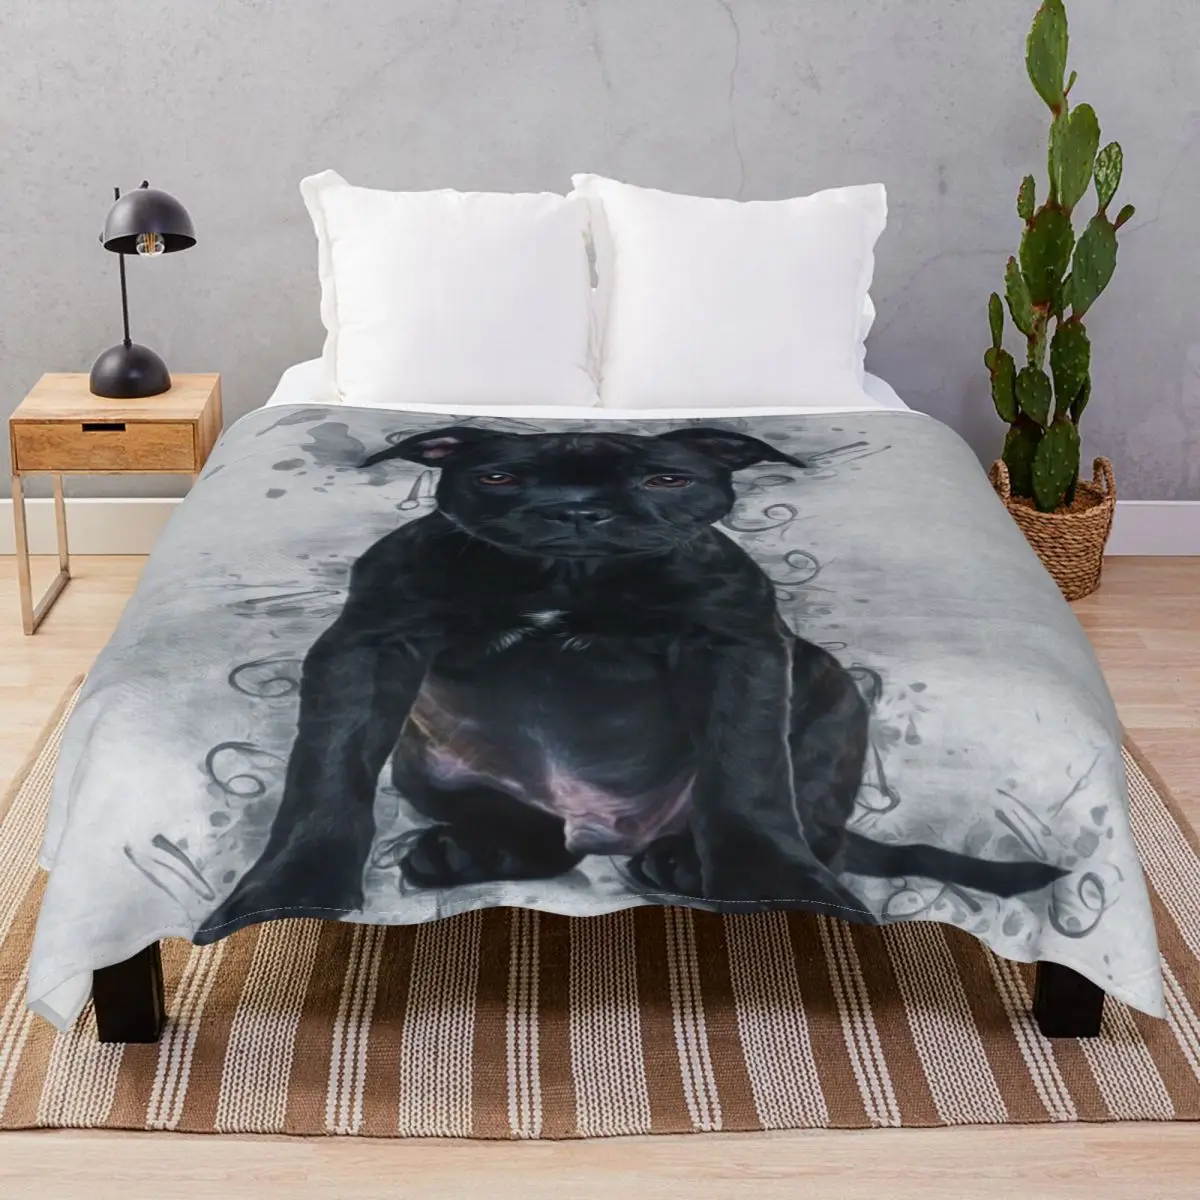 Staffordshire Bull Terrier Blankets Flannel Print Lightweight Unisex Throw Blanket for Bedding Sofa Camp Office